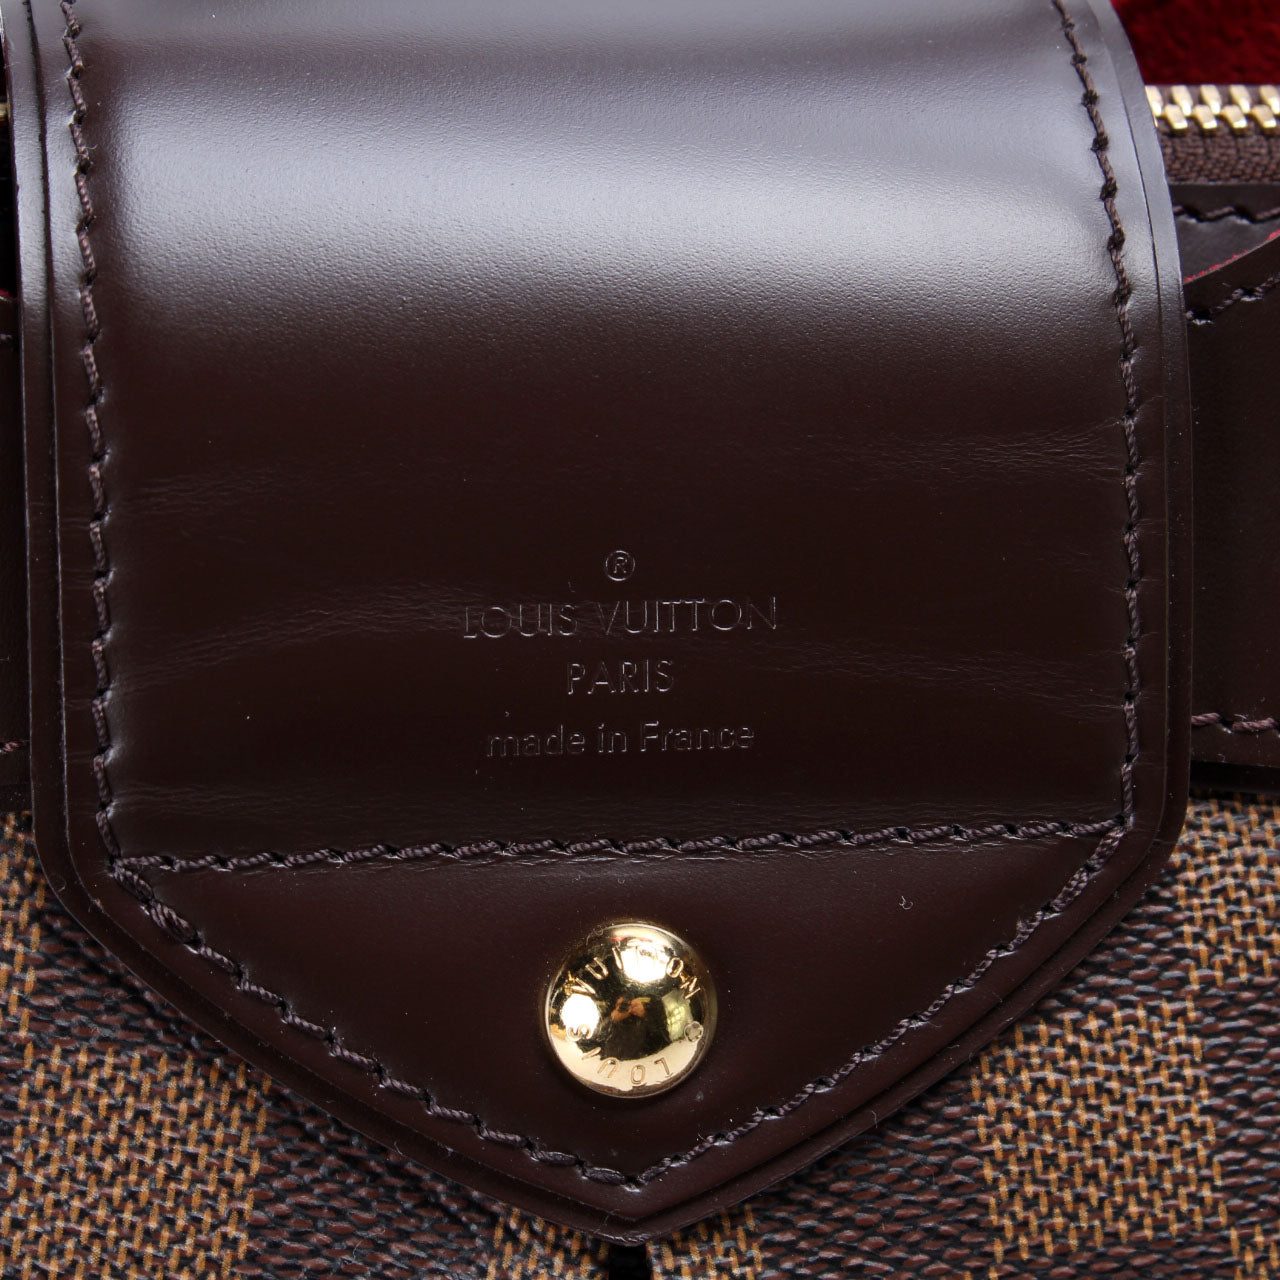 SALE❗️Original LV Louis Vuitton Sistina PM LAST PRICE POSTED